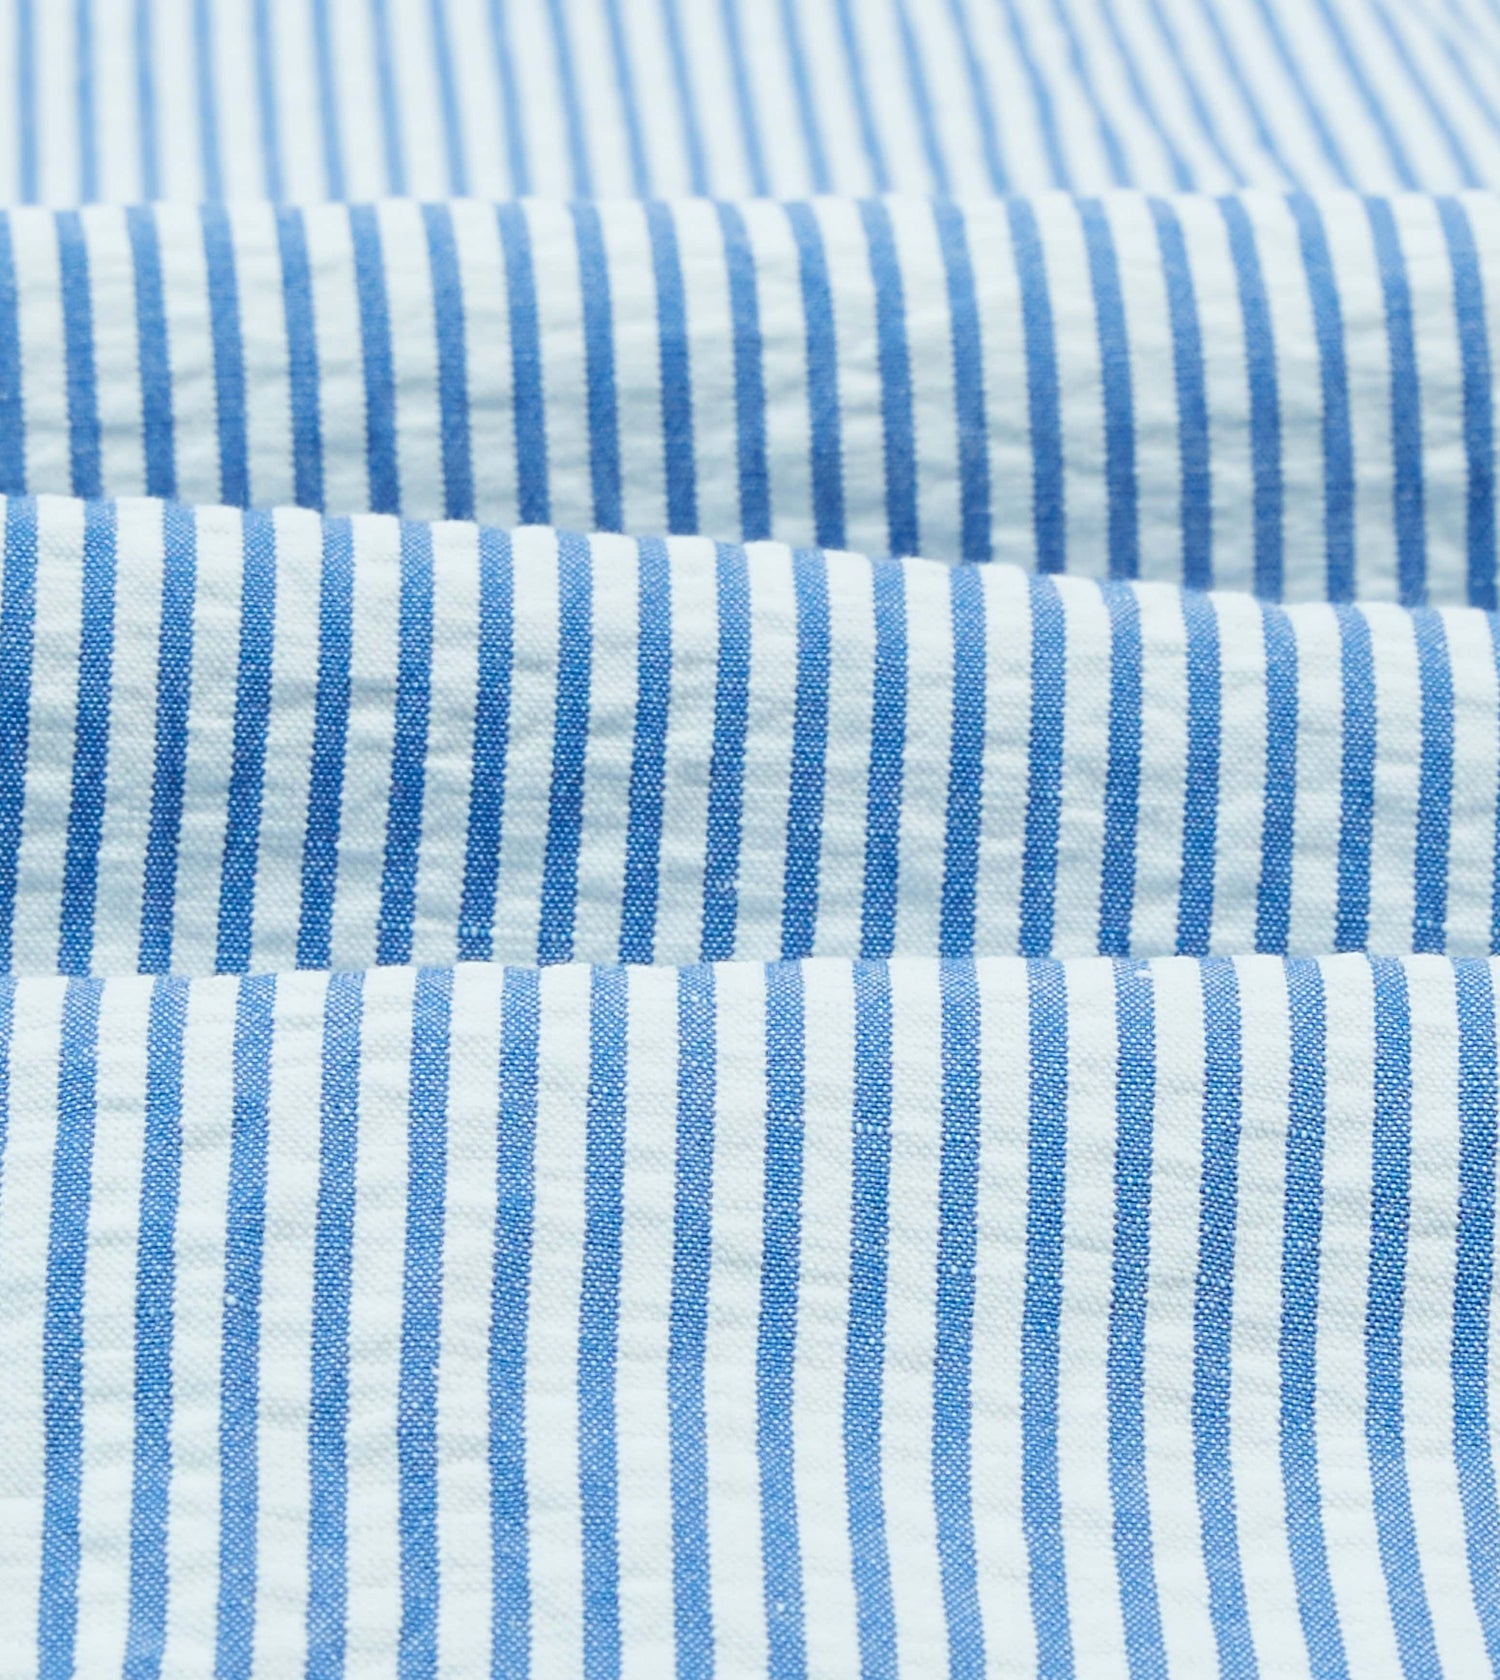 Blue and White Stripe Cotton-Linen Seersucker Camp Collar Short Sleeve Shirt